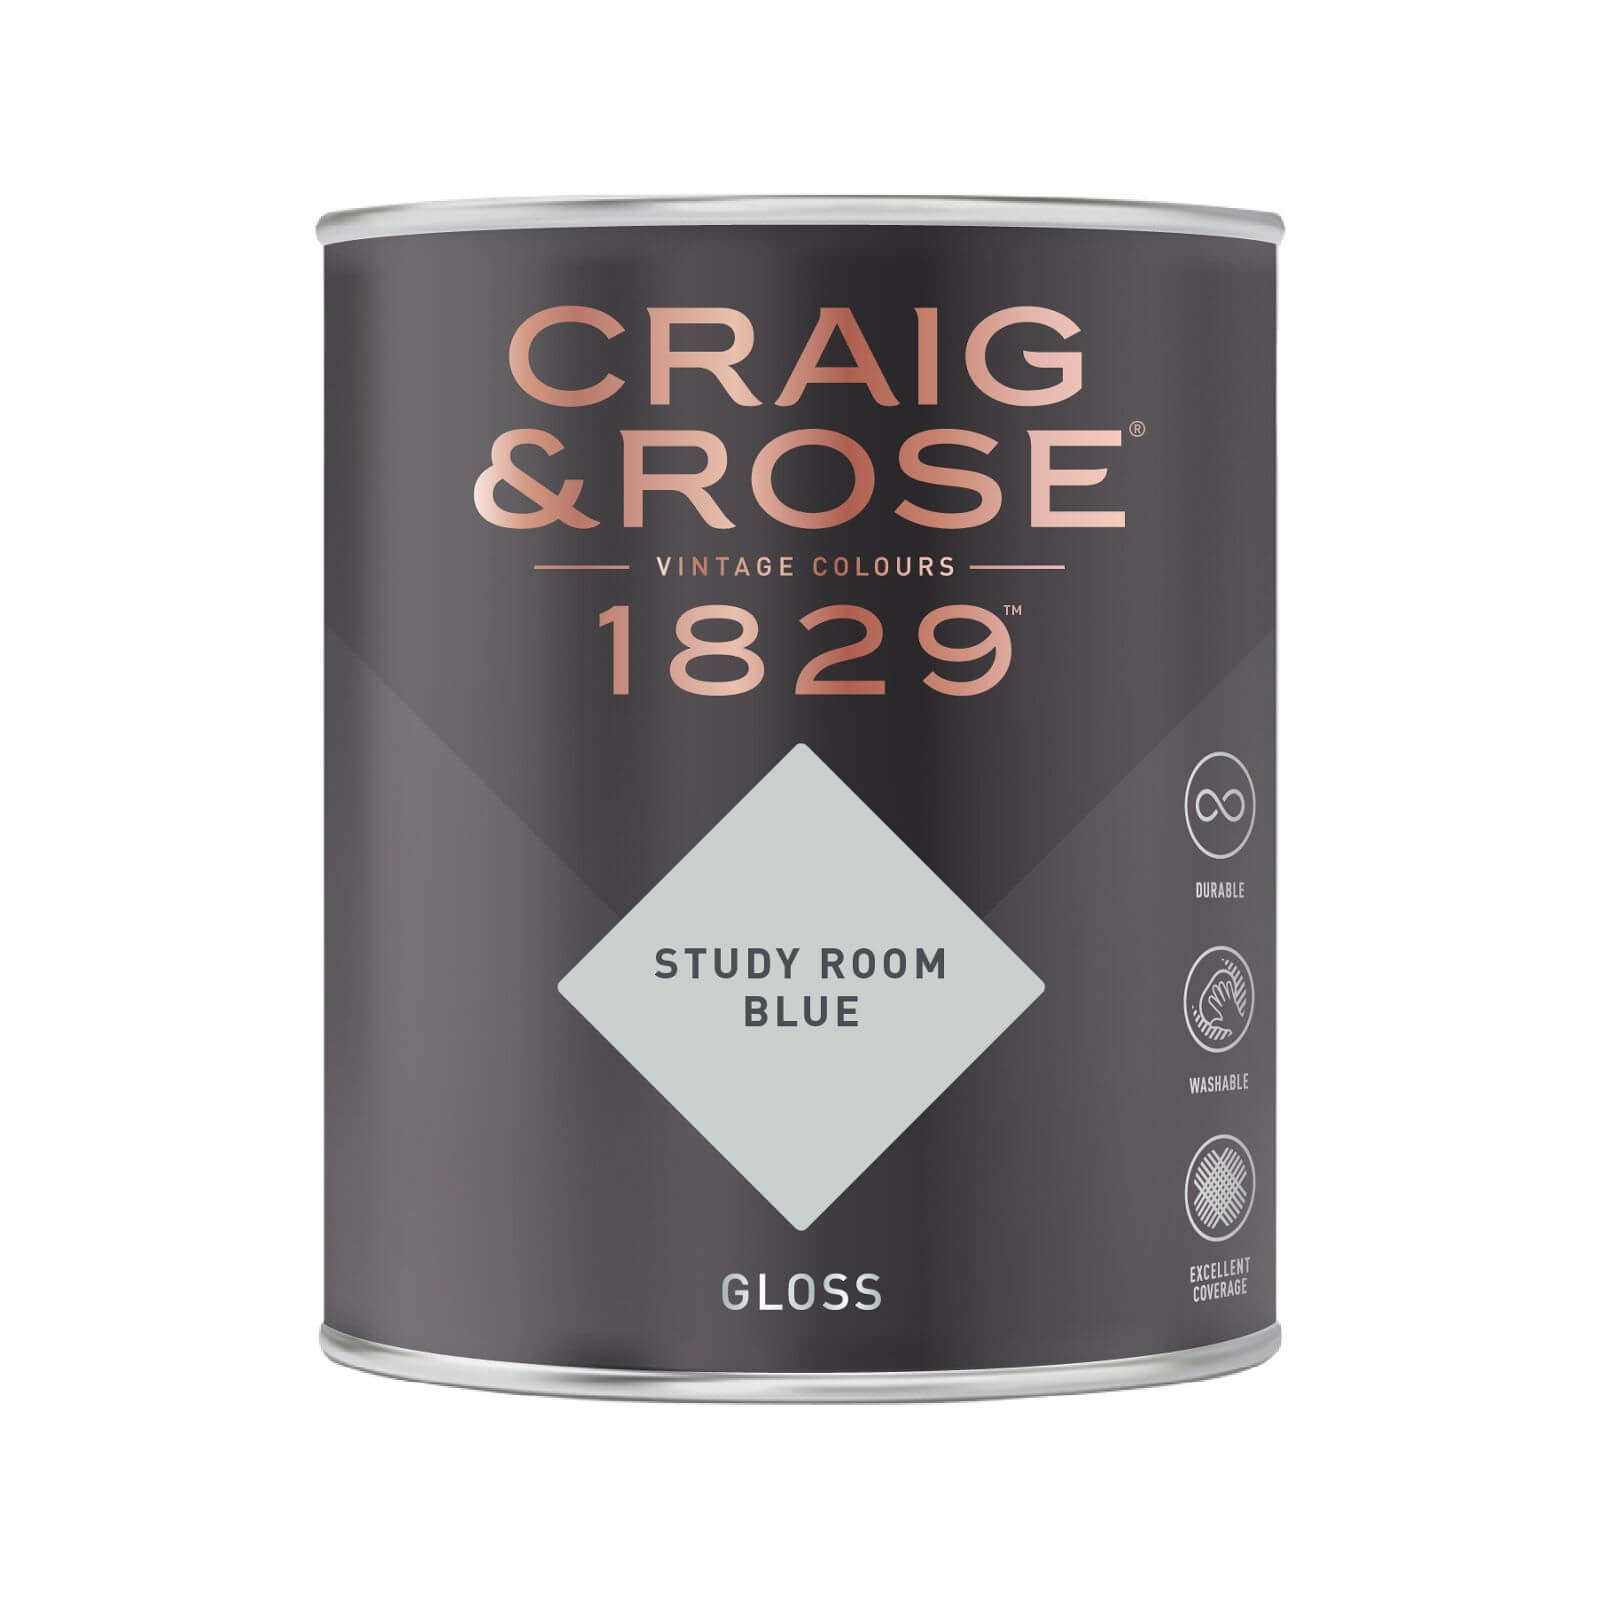 Craig & Rose 1829 Gloss Paint Study Room Blue - 750ml